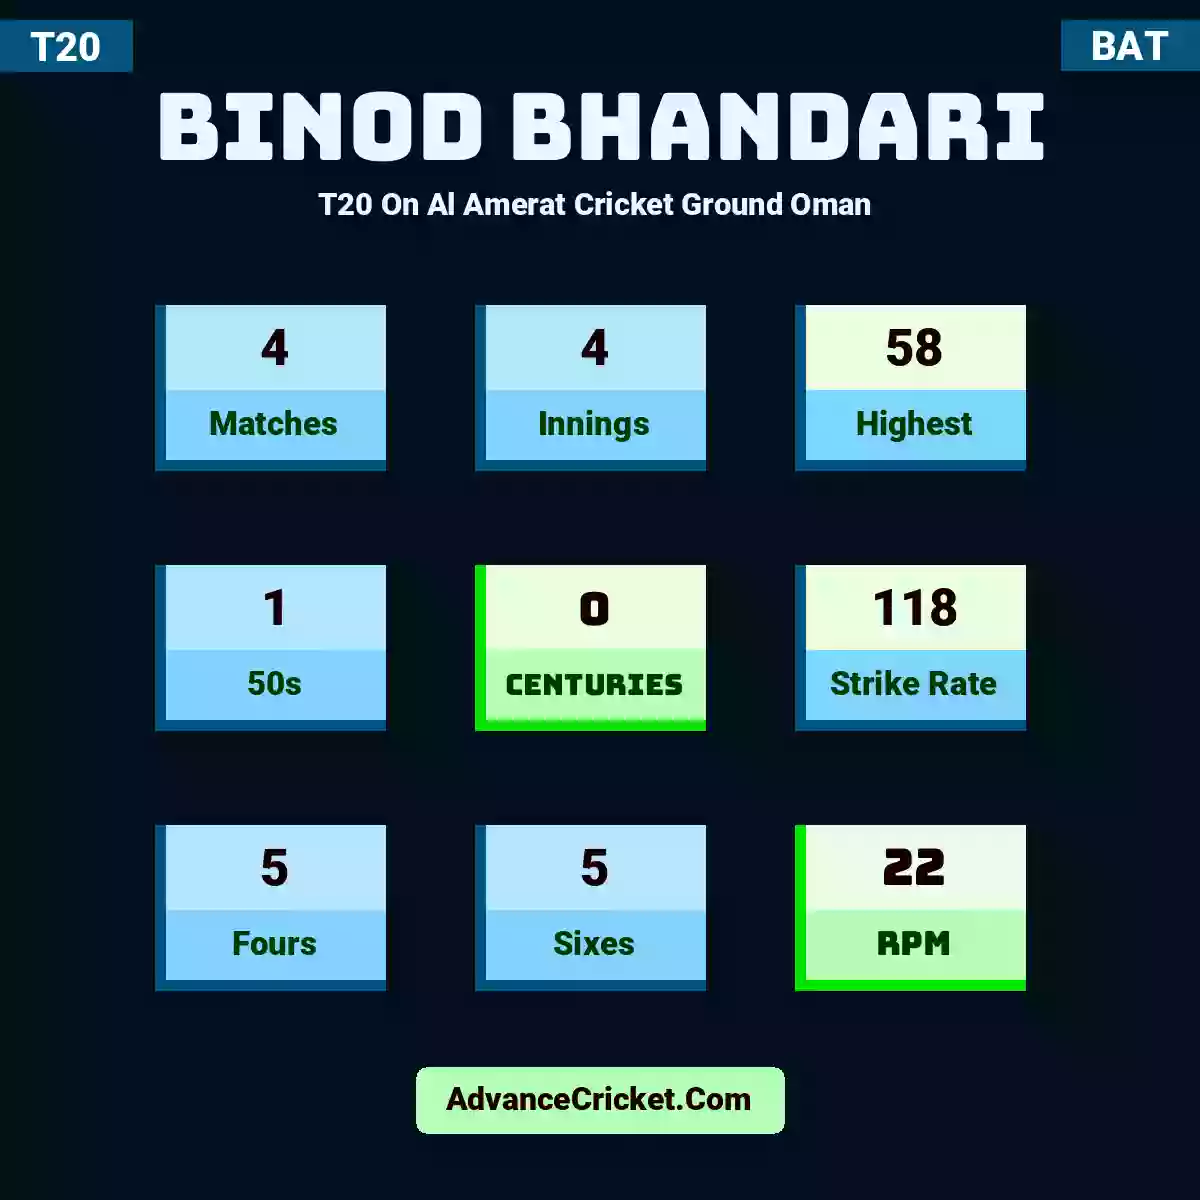 Binod Bhandari T20  On Al Amerat Cricket Ground Oman , Binod Bhandari played 4 matches, scored 58 runs as highest, 1 half-centuries, and 0 centuries, with a strike rate of 118. B.Bhandari hit 5 fours and 5 sixes, with an RPM of 22.